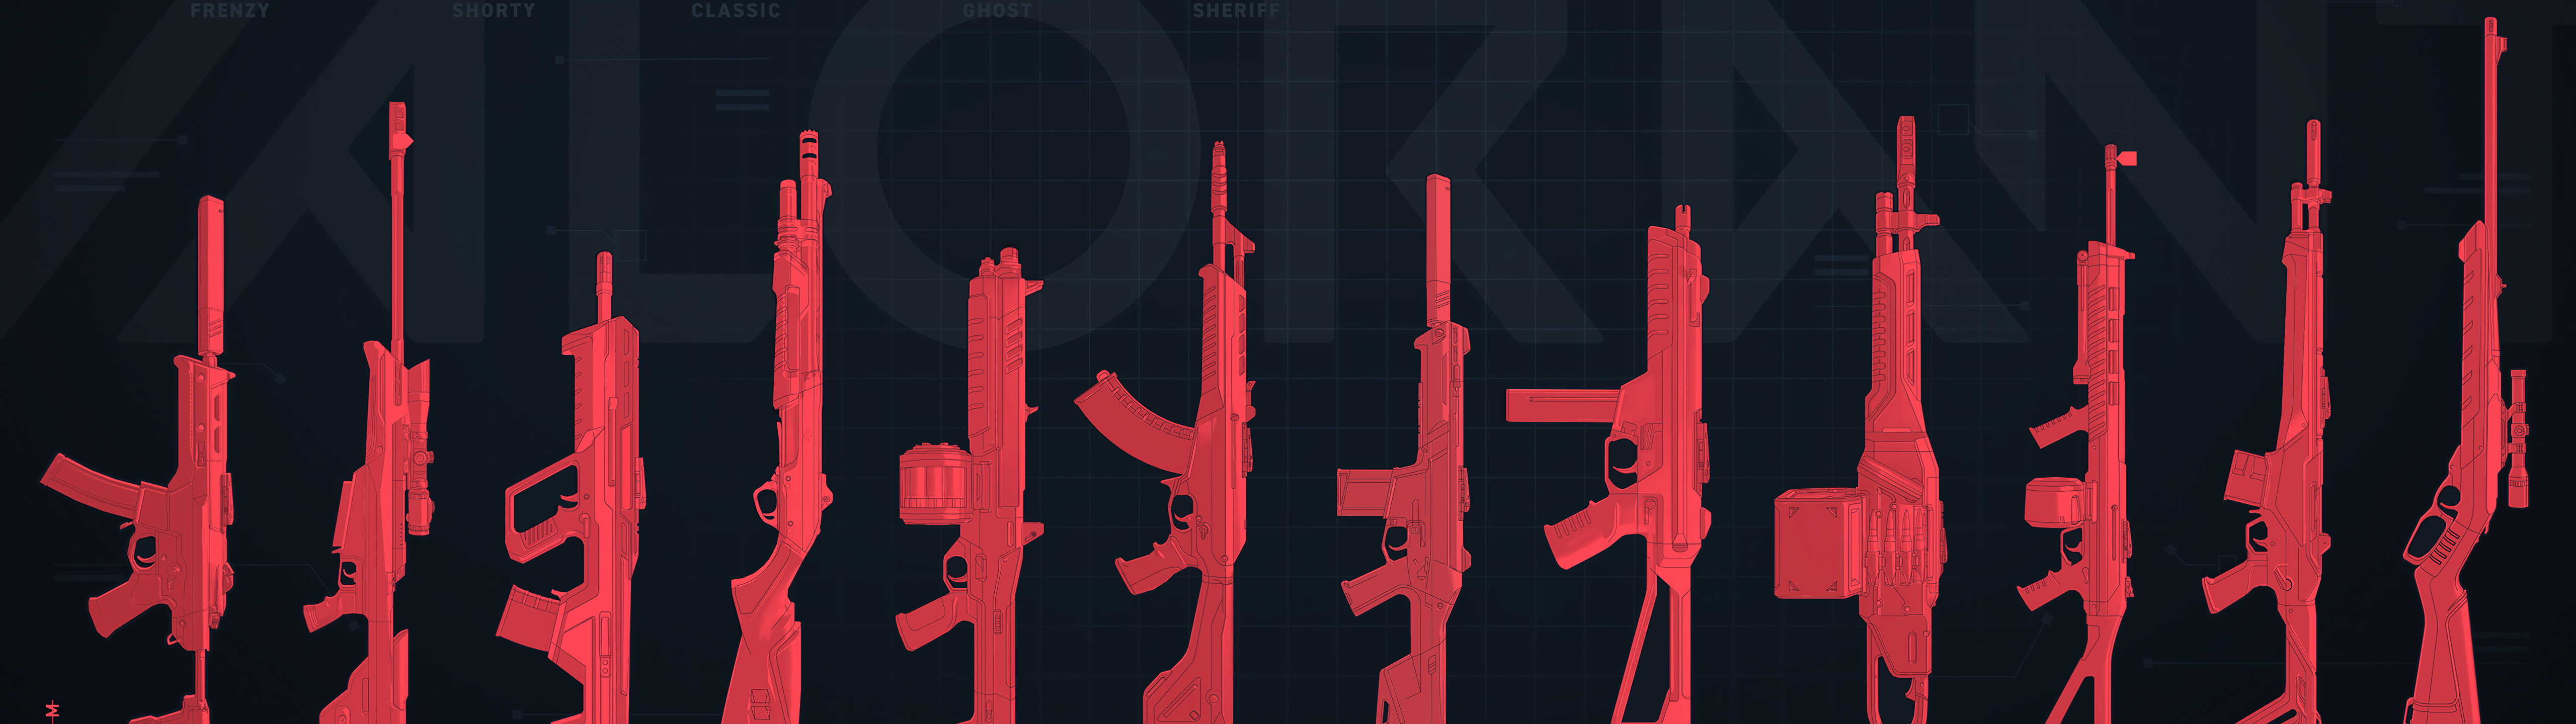 Valorant Guns Weapons Wallpaper 4K iPhone Desktop 273